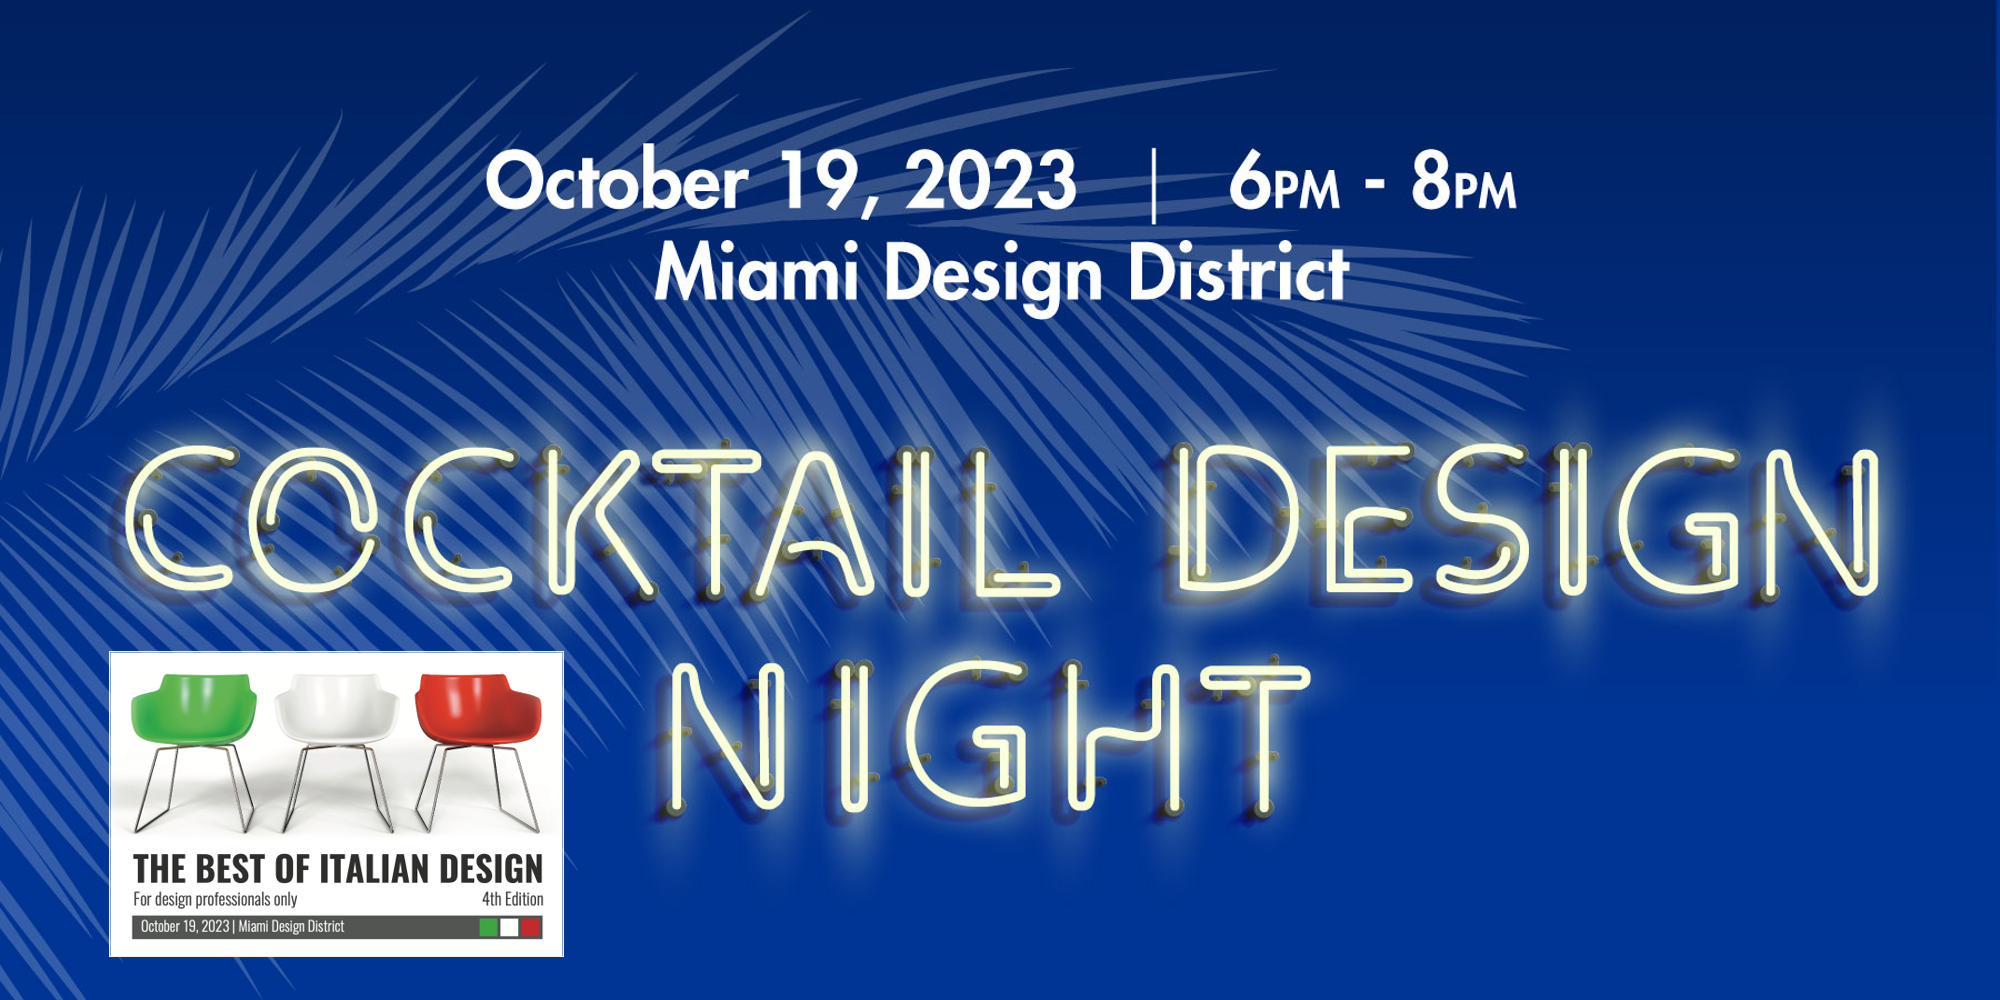 Cocktail Design Night - 2023 - IACC - Miami